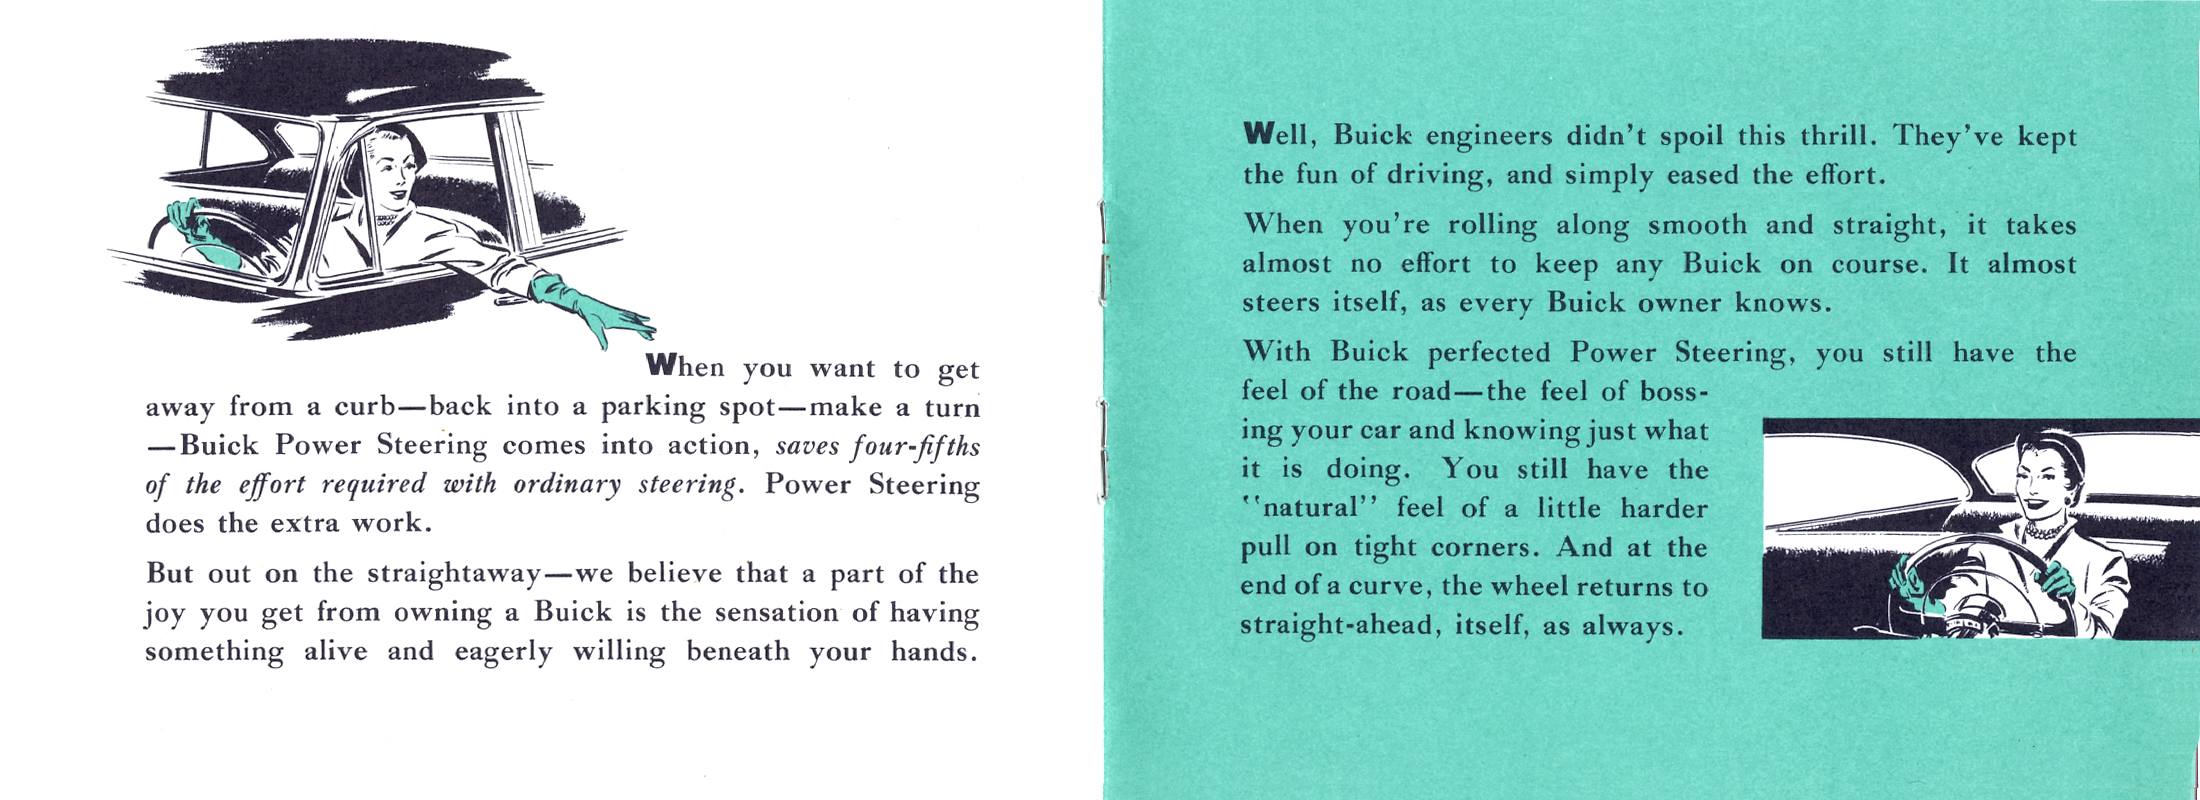 1952 Buick Power Steering Folder-04-05